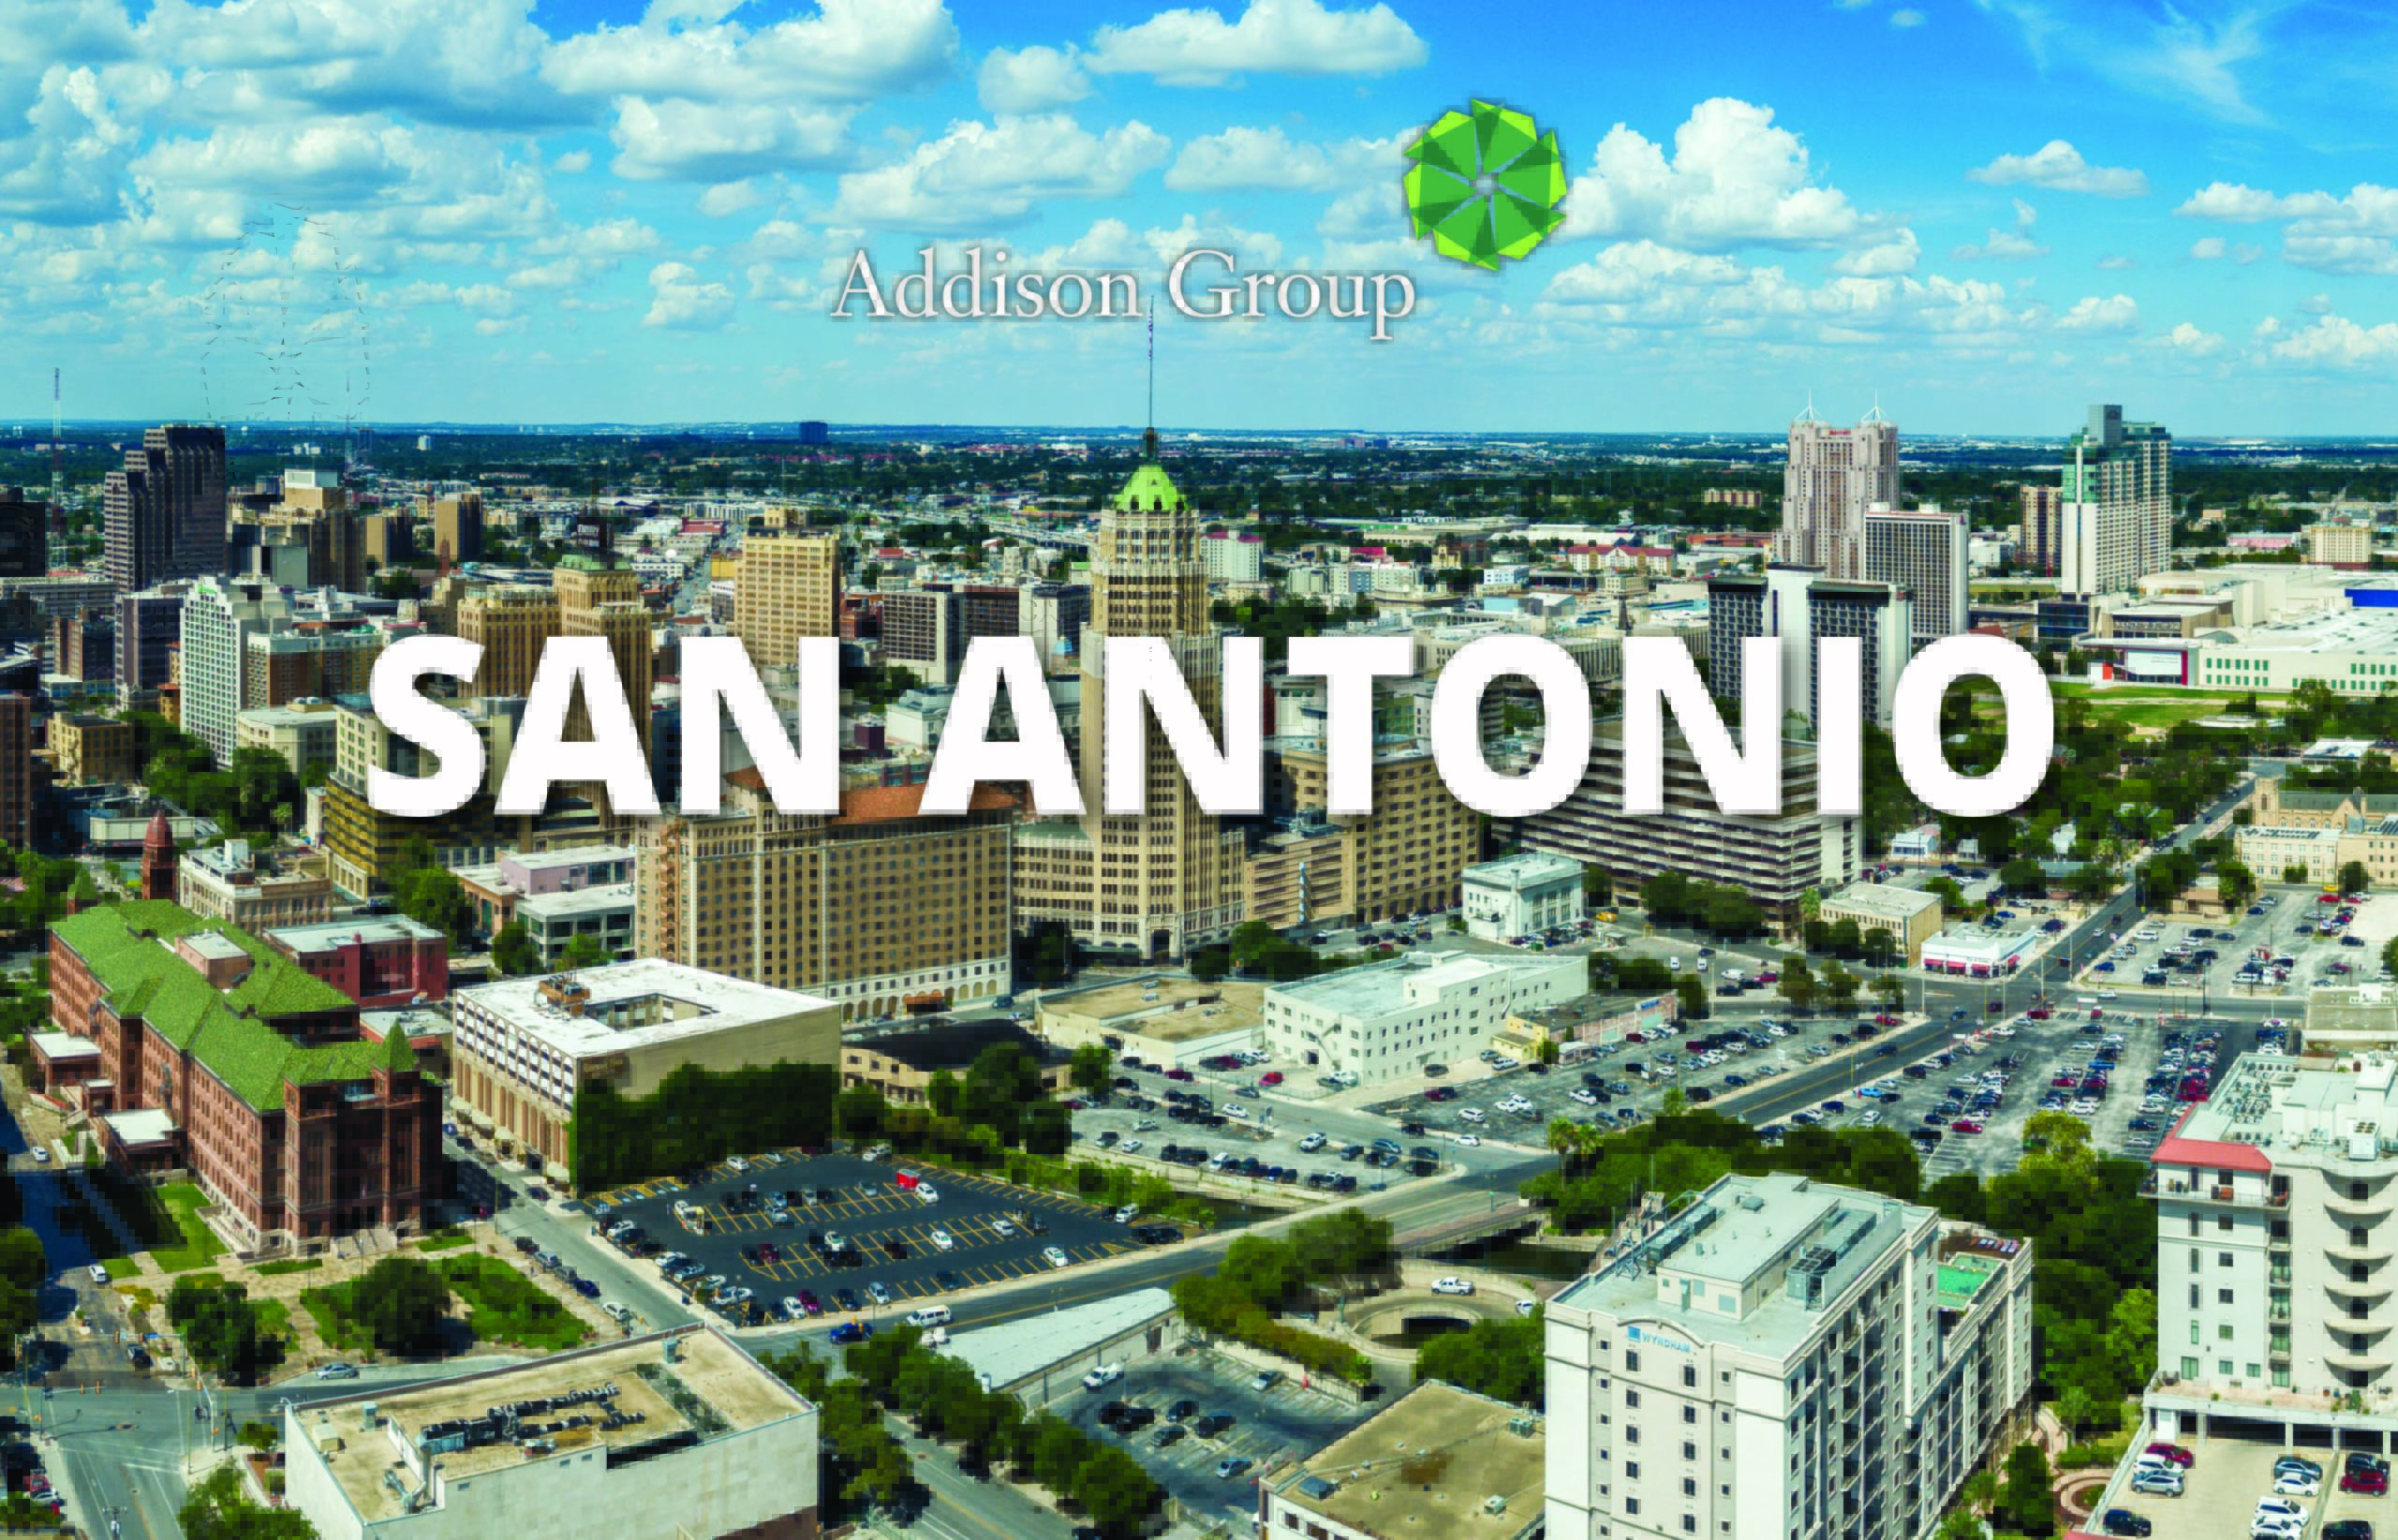 San Antonio cityscape with San Antonio text overlay